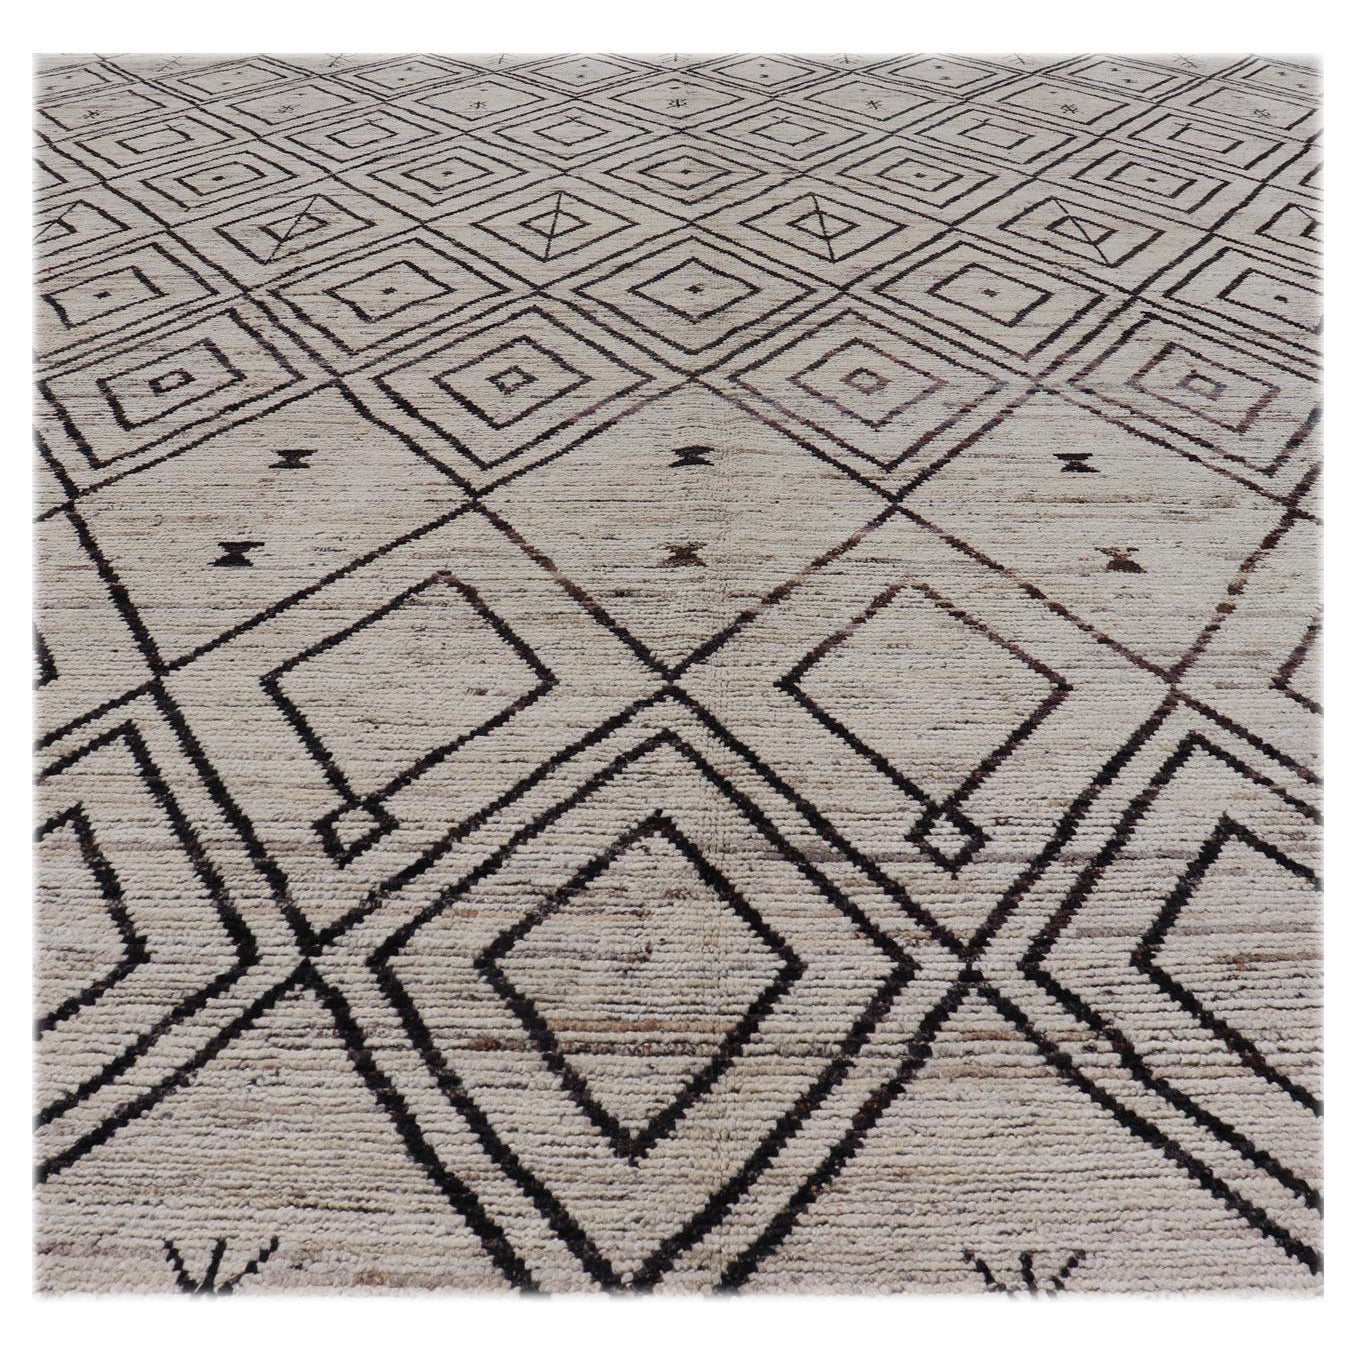  Tribal Moroccan Modern Rug in Wool with Geometric Diamond Design  For Sale